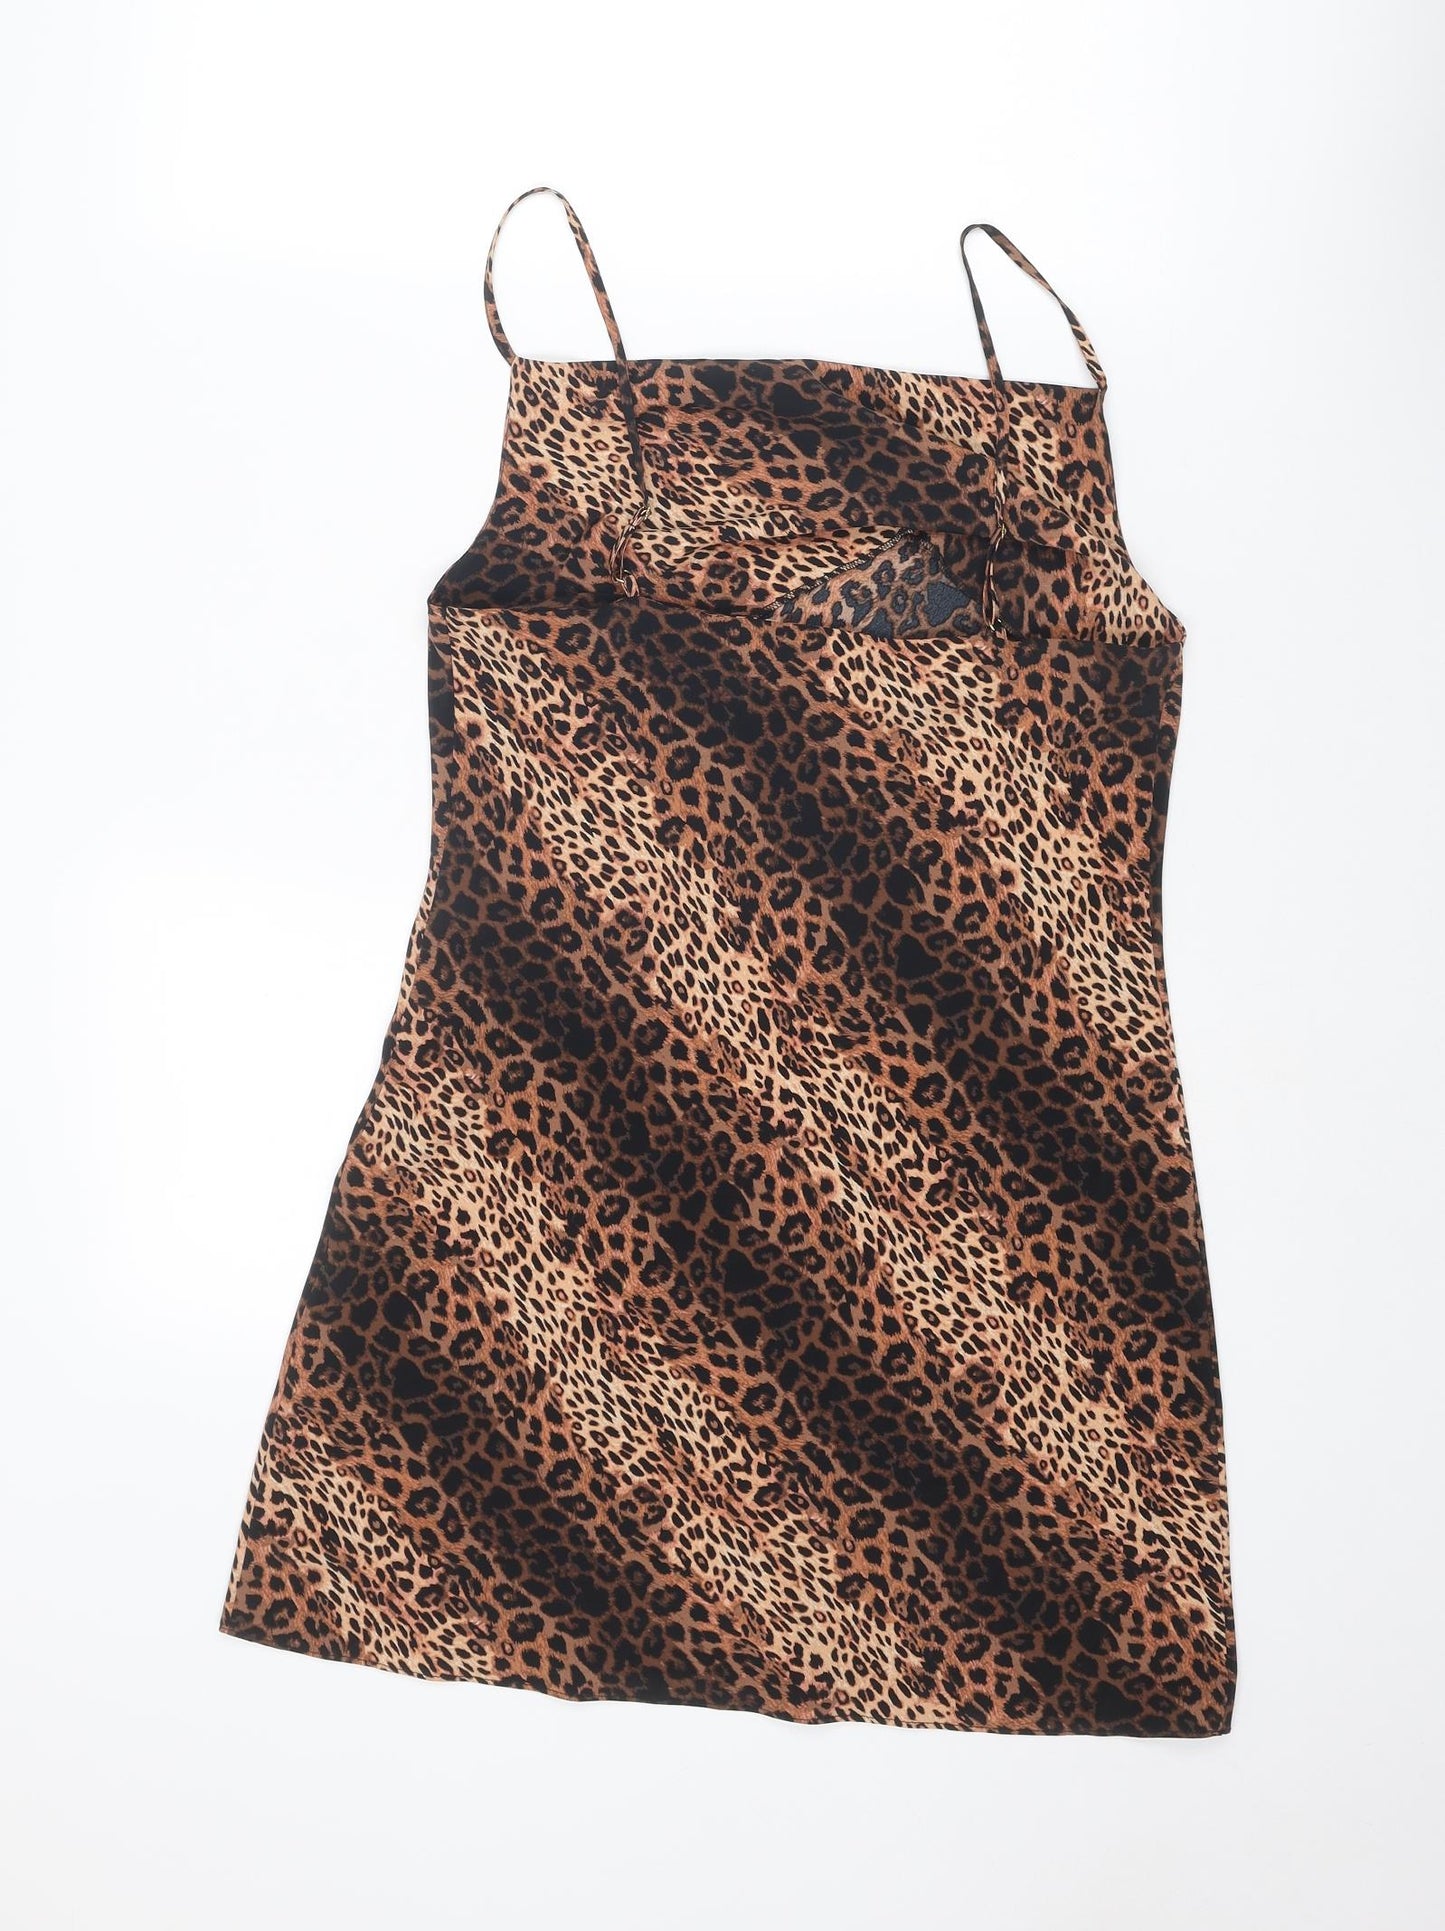 Miss Selfridge Womens Brown Animal Print Polyester Mini Size 10 Cowl Neck Pullover - Leopard Print